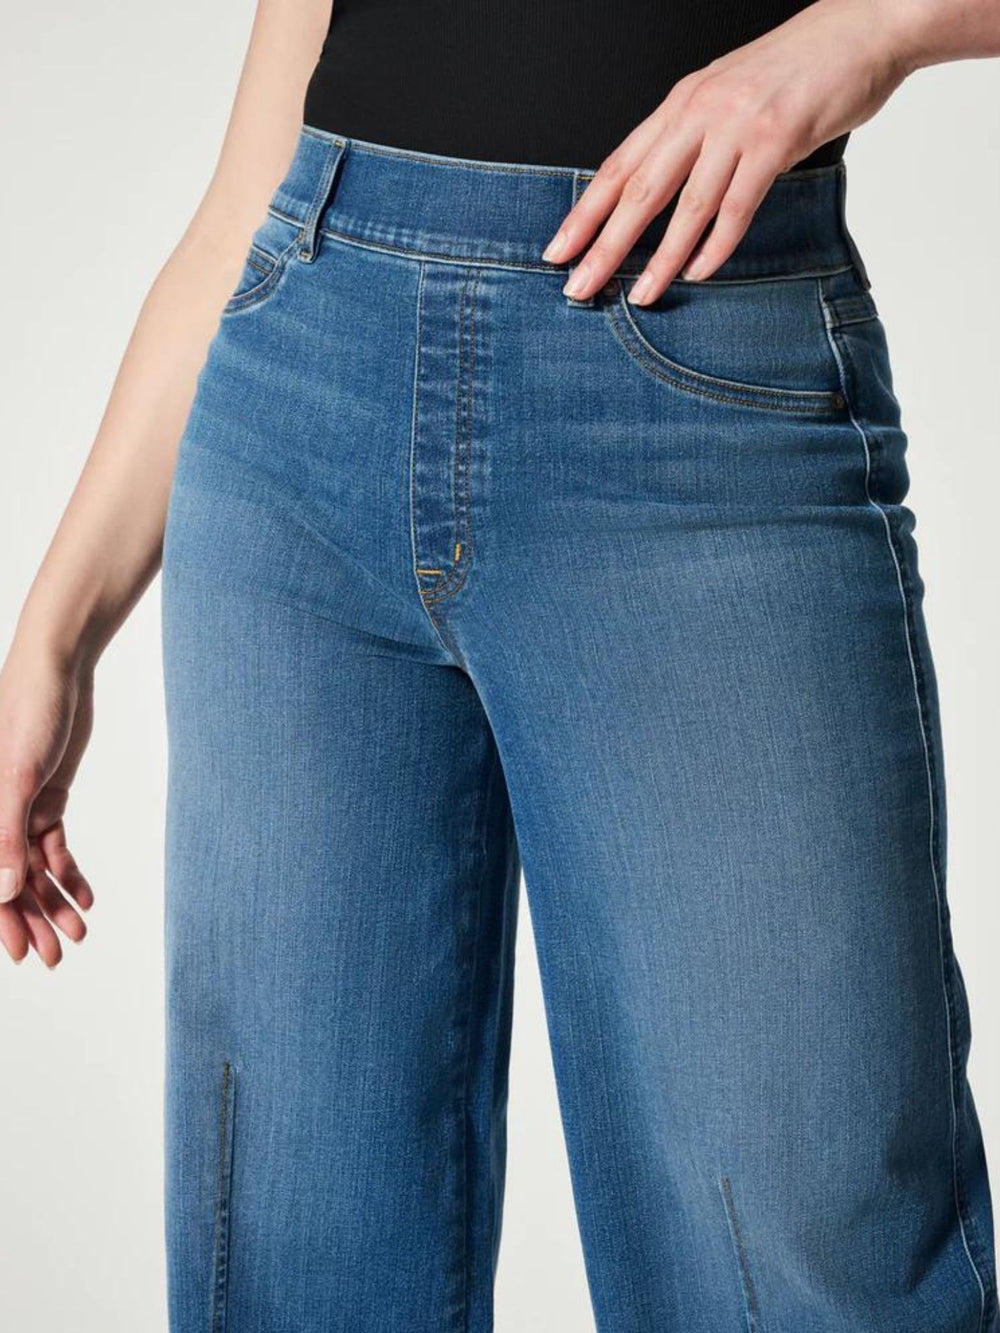 seam detail denim jeans